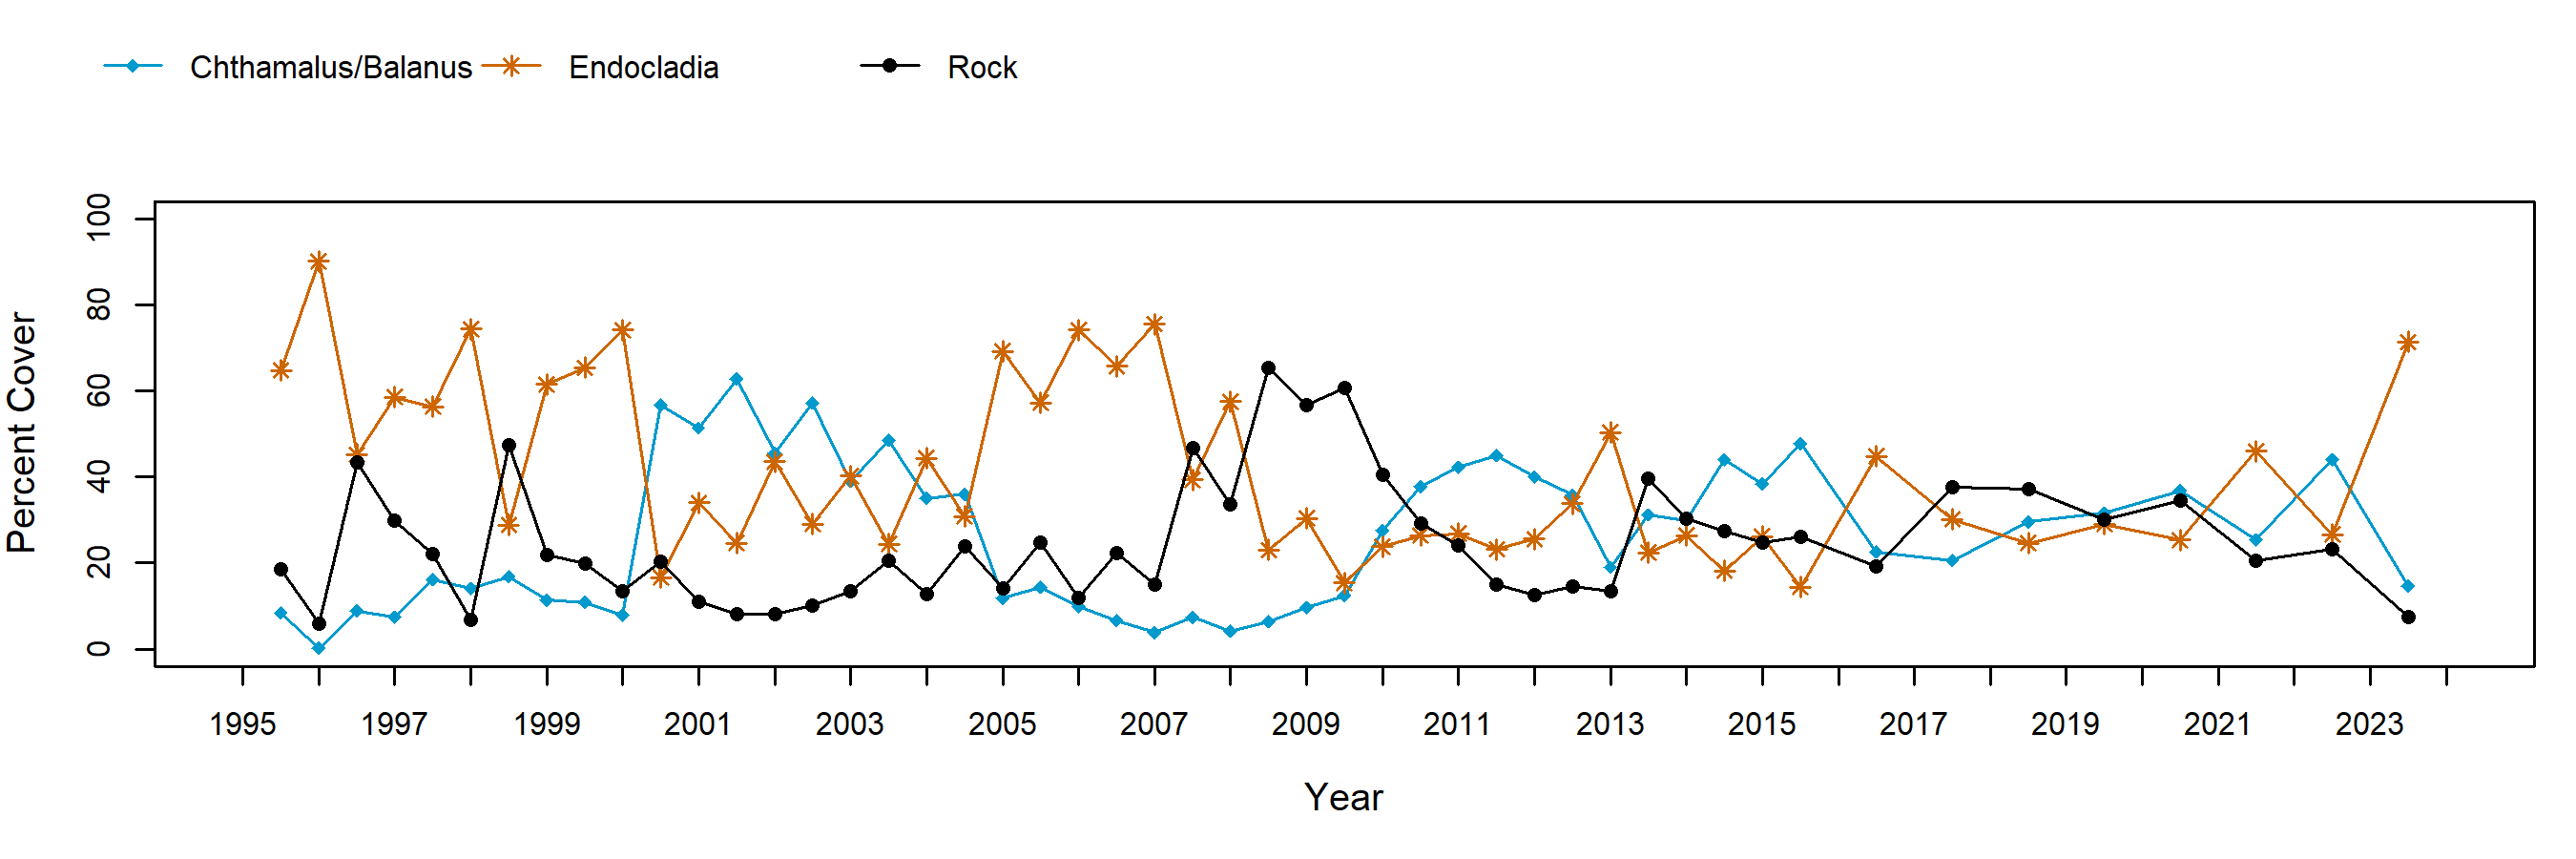 Shell Beach Endocladia trend plot